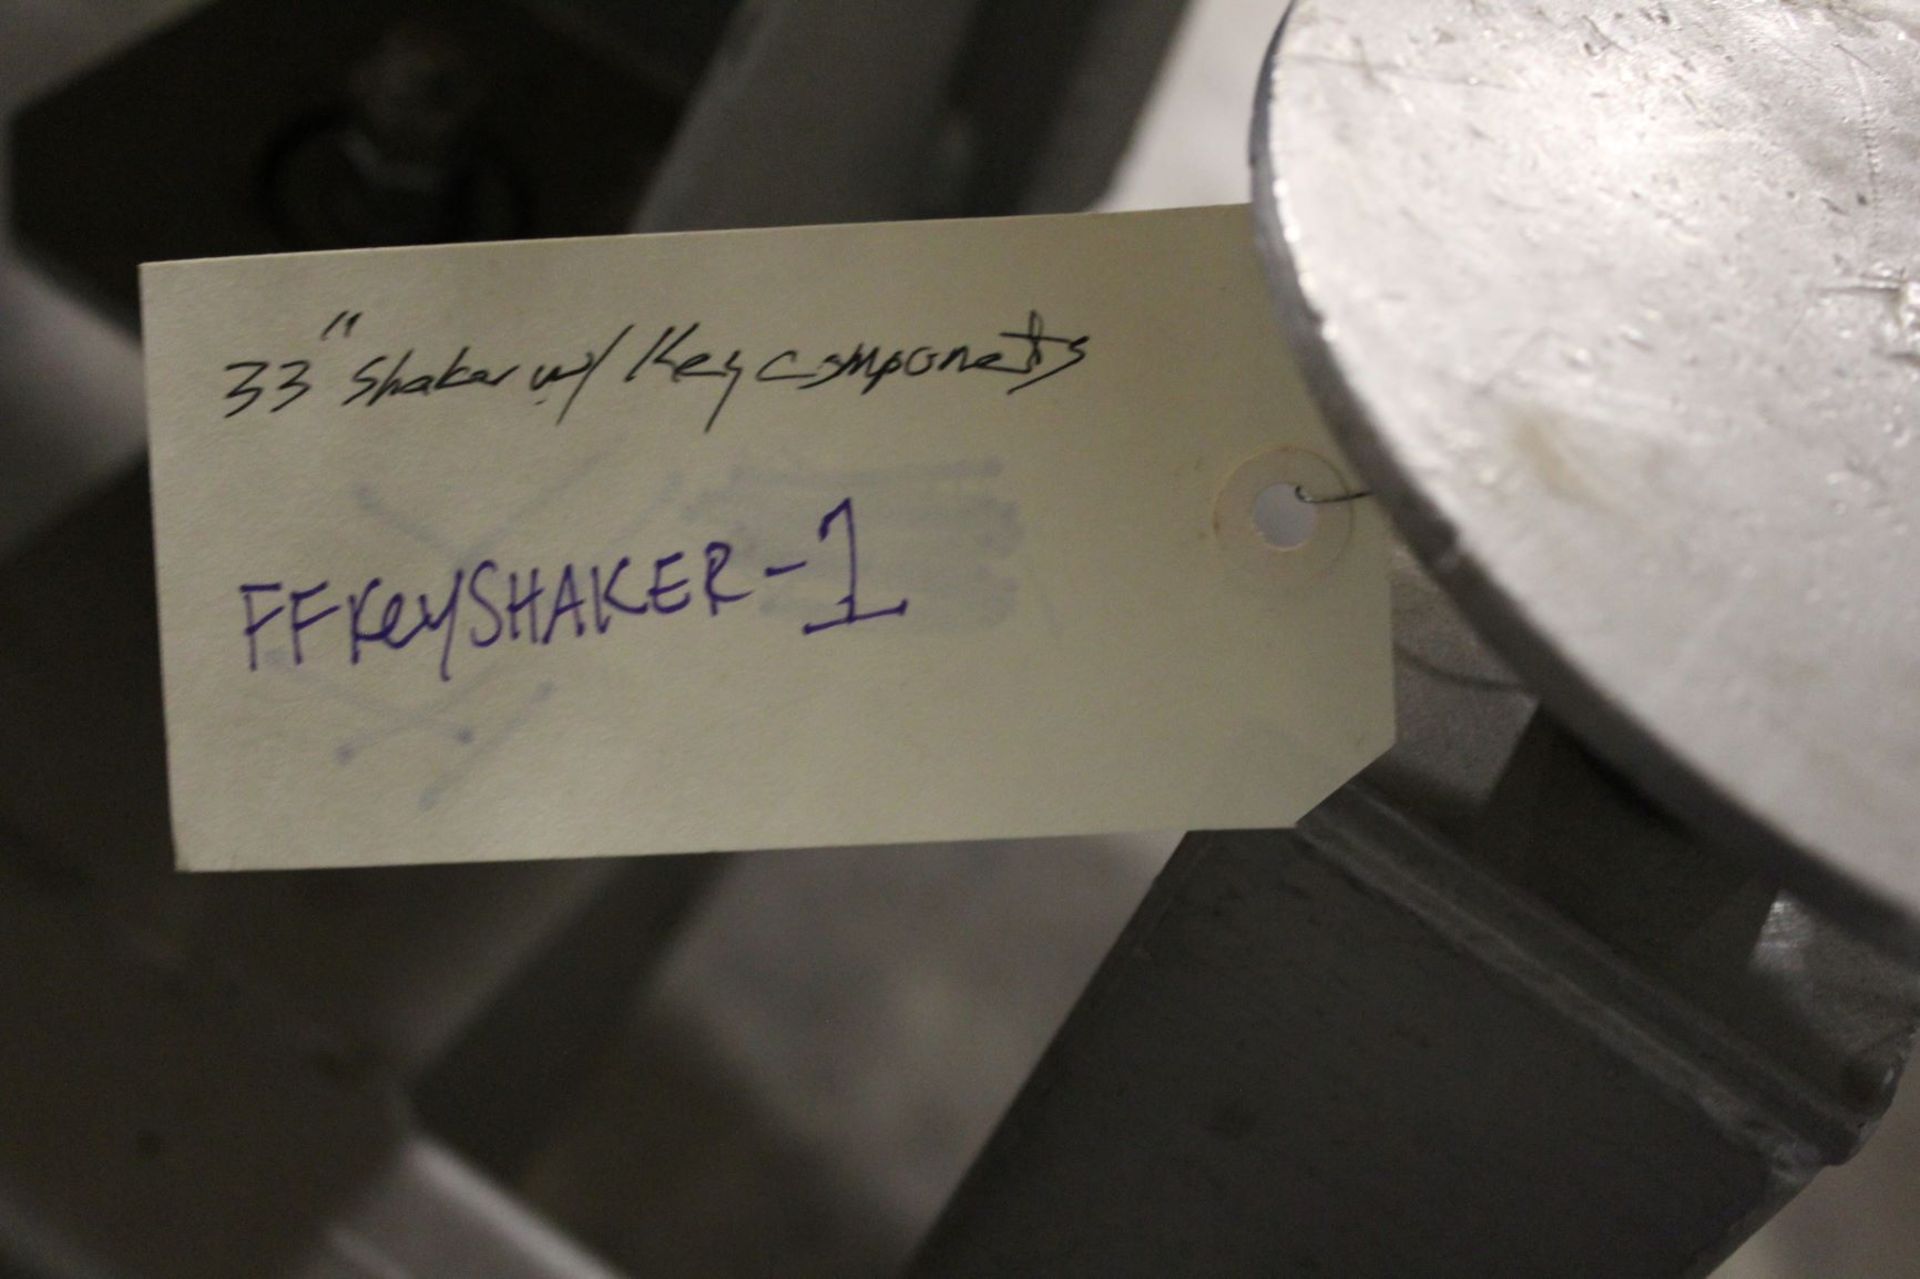 Key Shaker w/ Components, Item# Ffkeyshaker-1, - Bild 4 aus 4